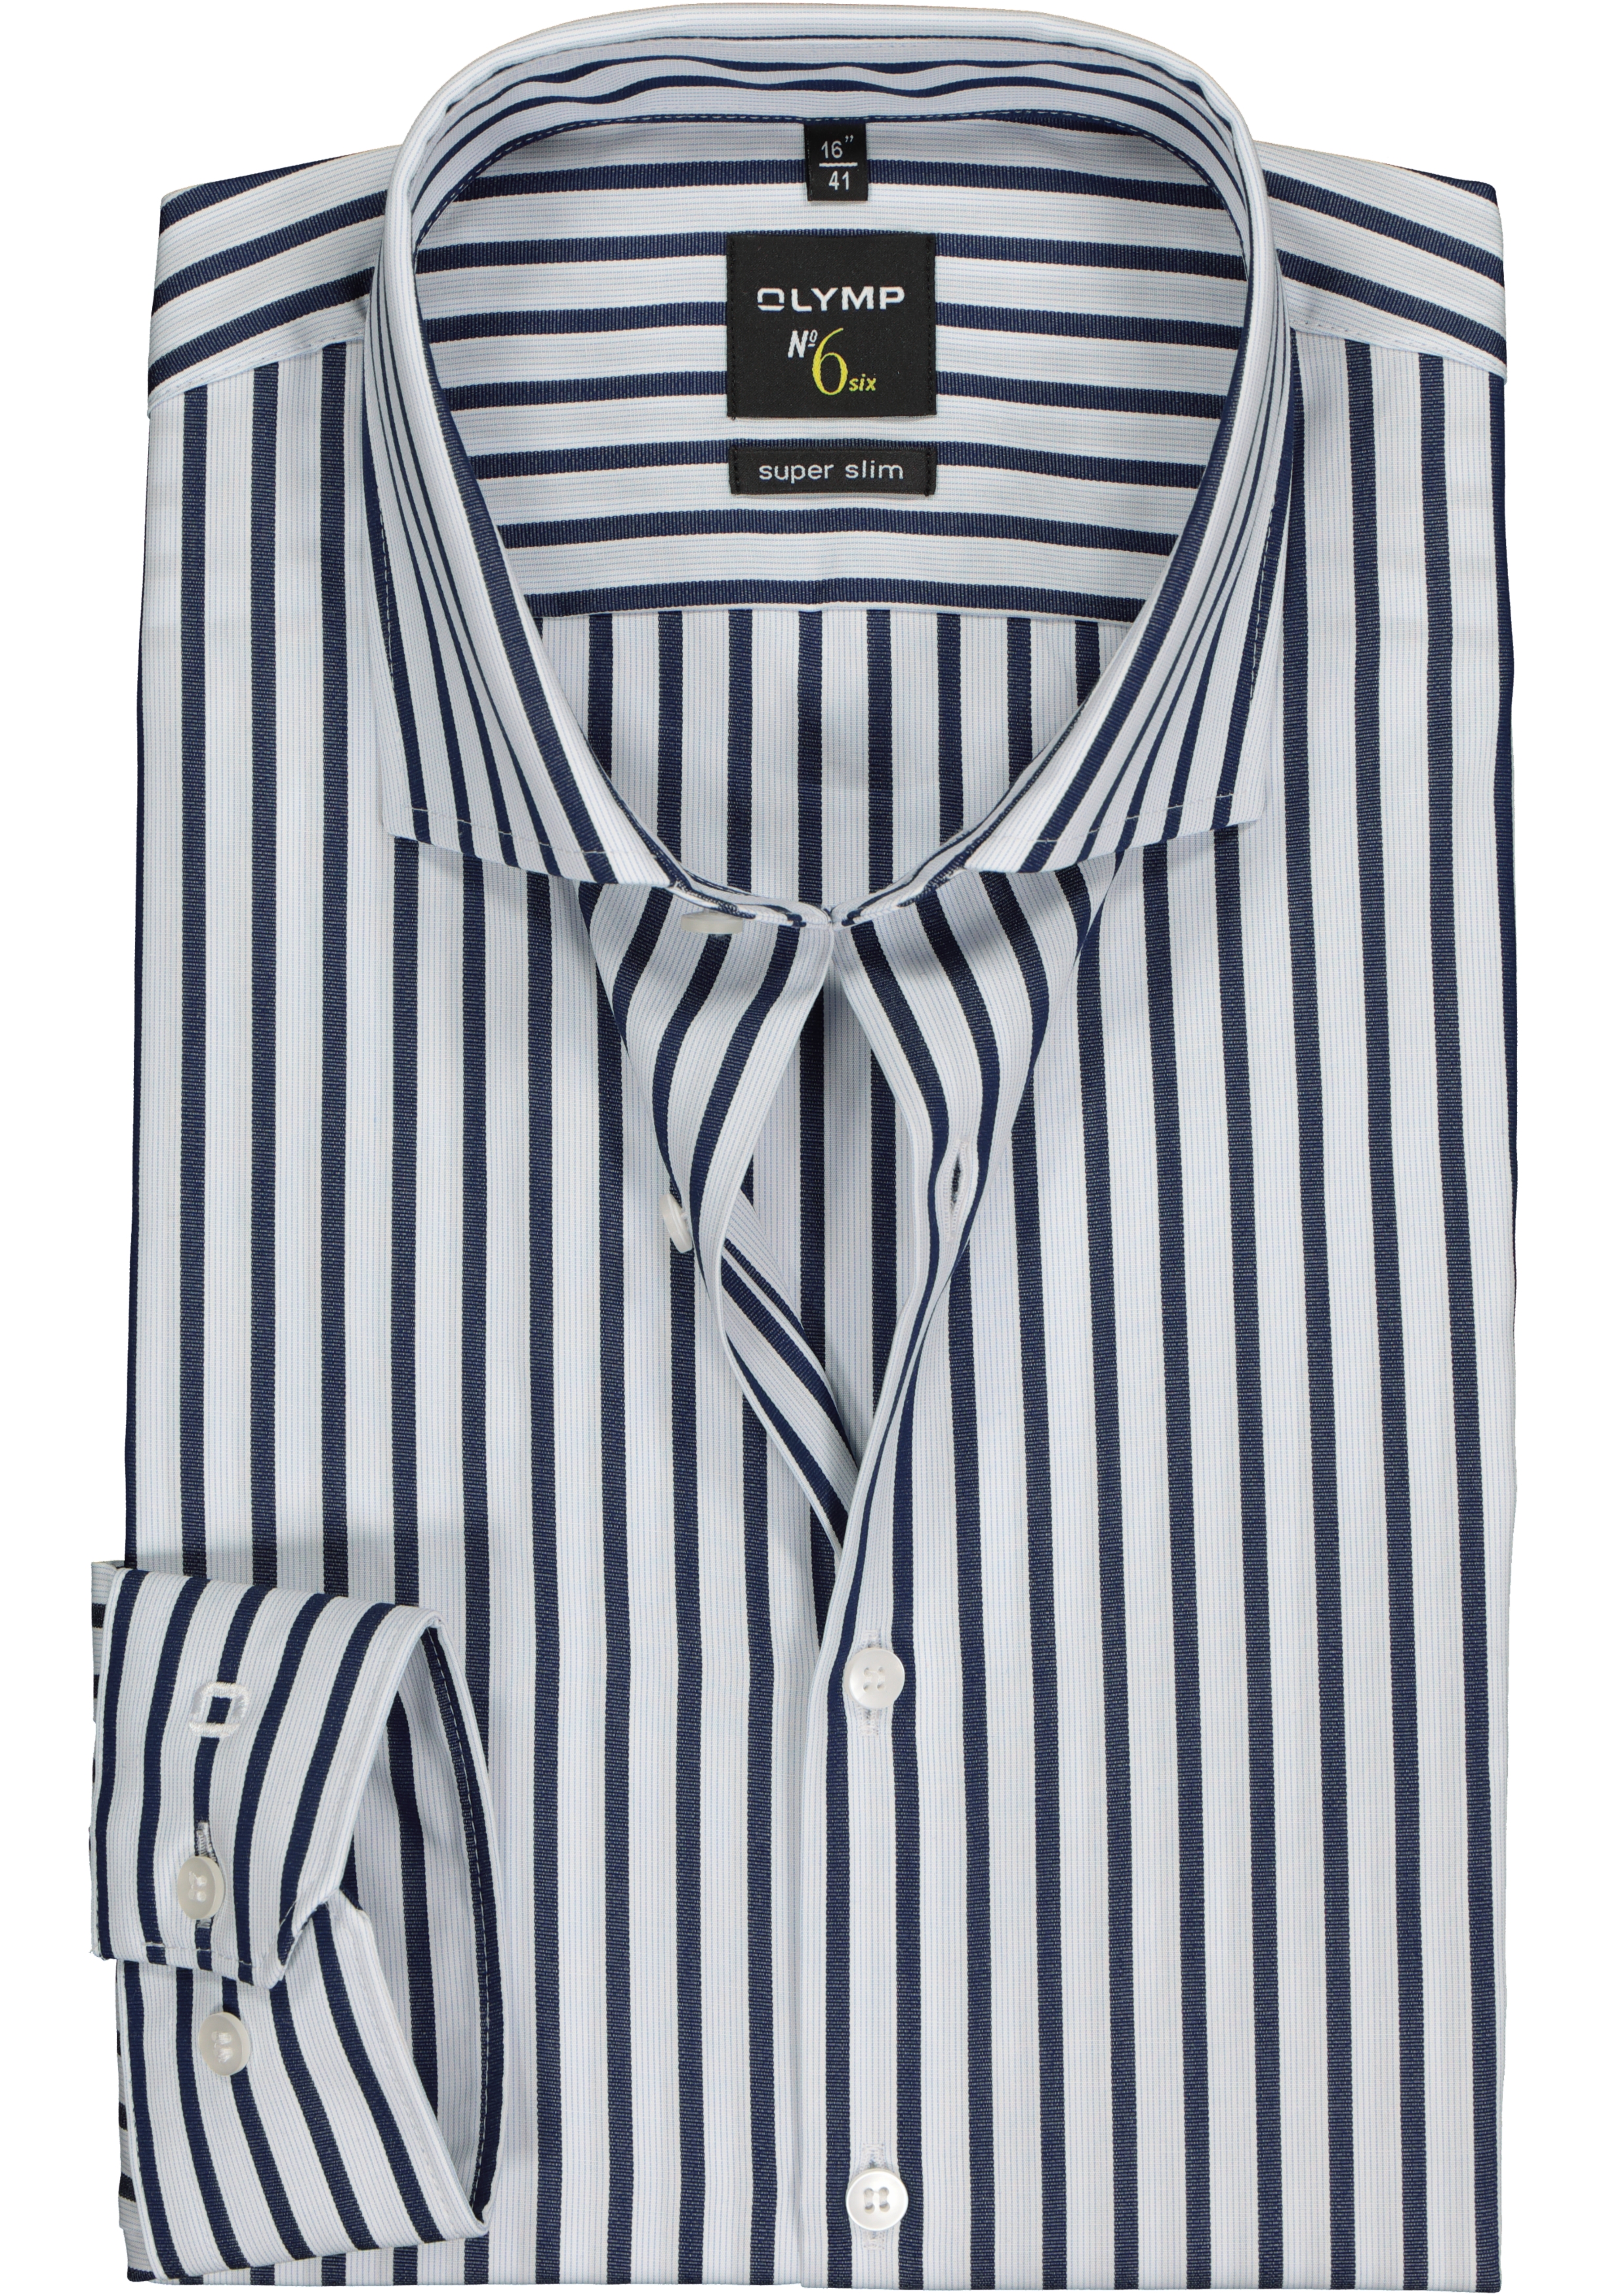 OLYMP No. 6 Six super slim fit overhemd, marine blauw met wit gestreept